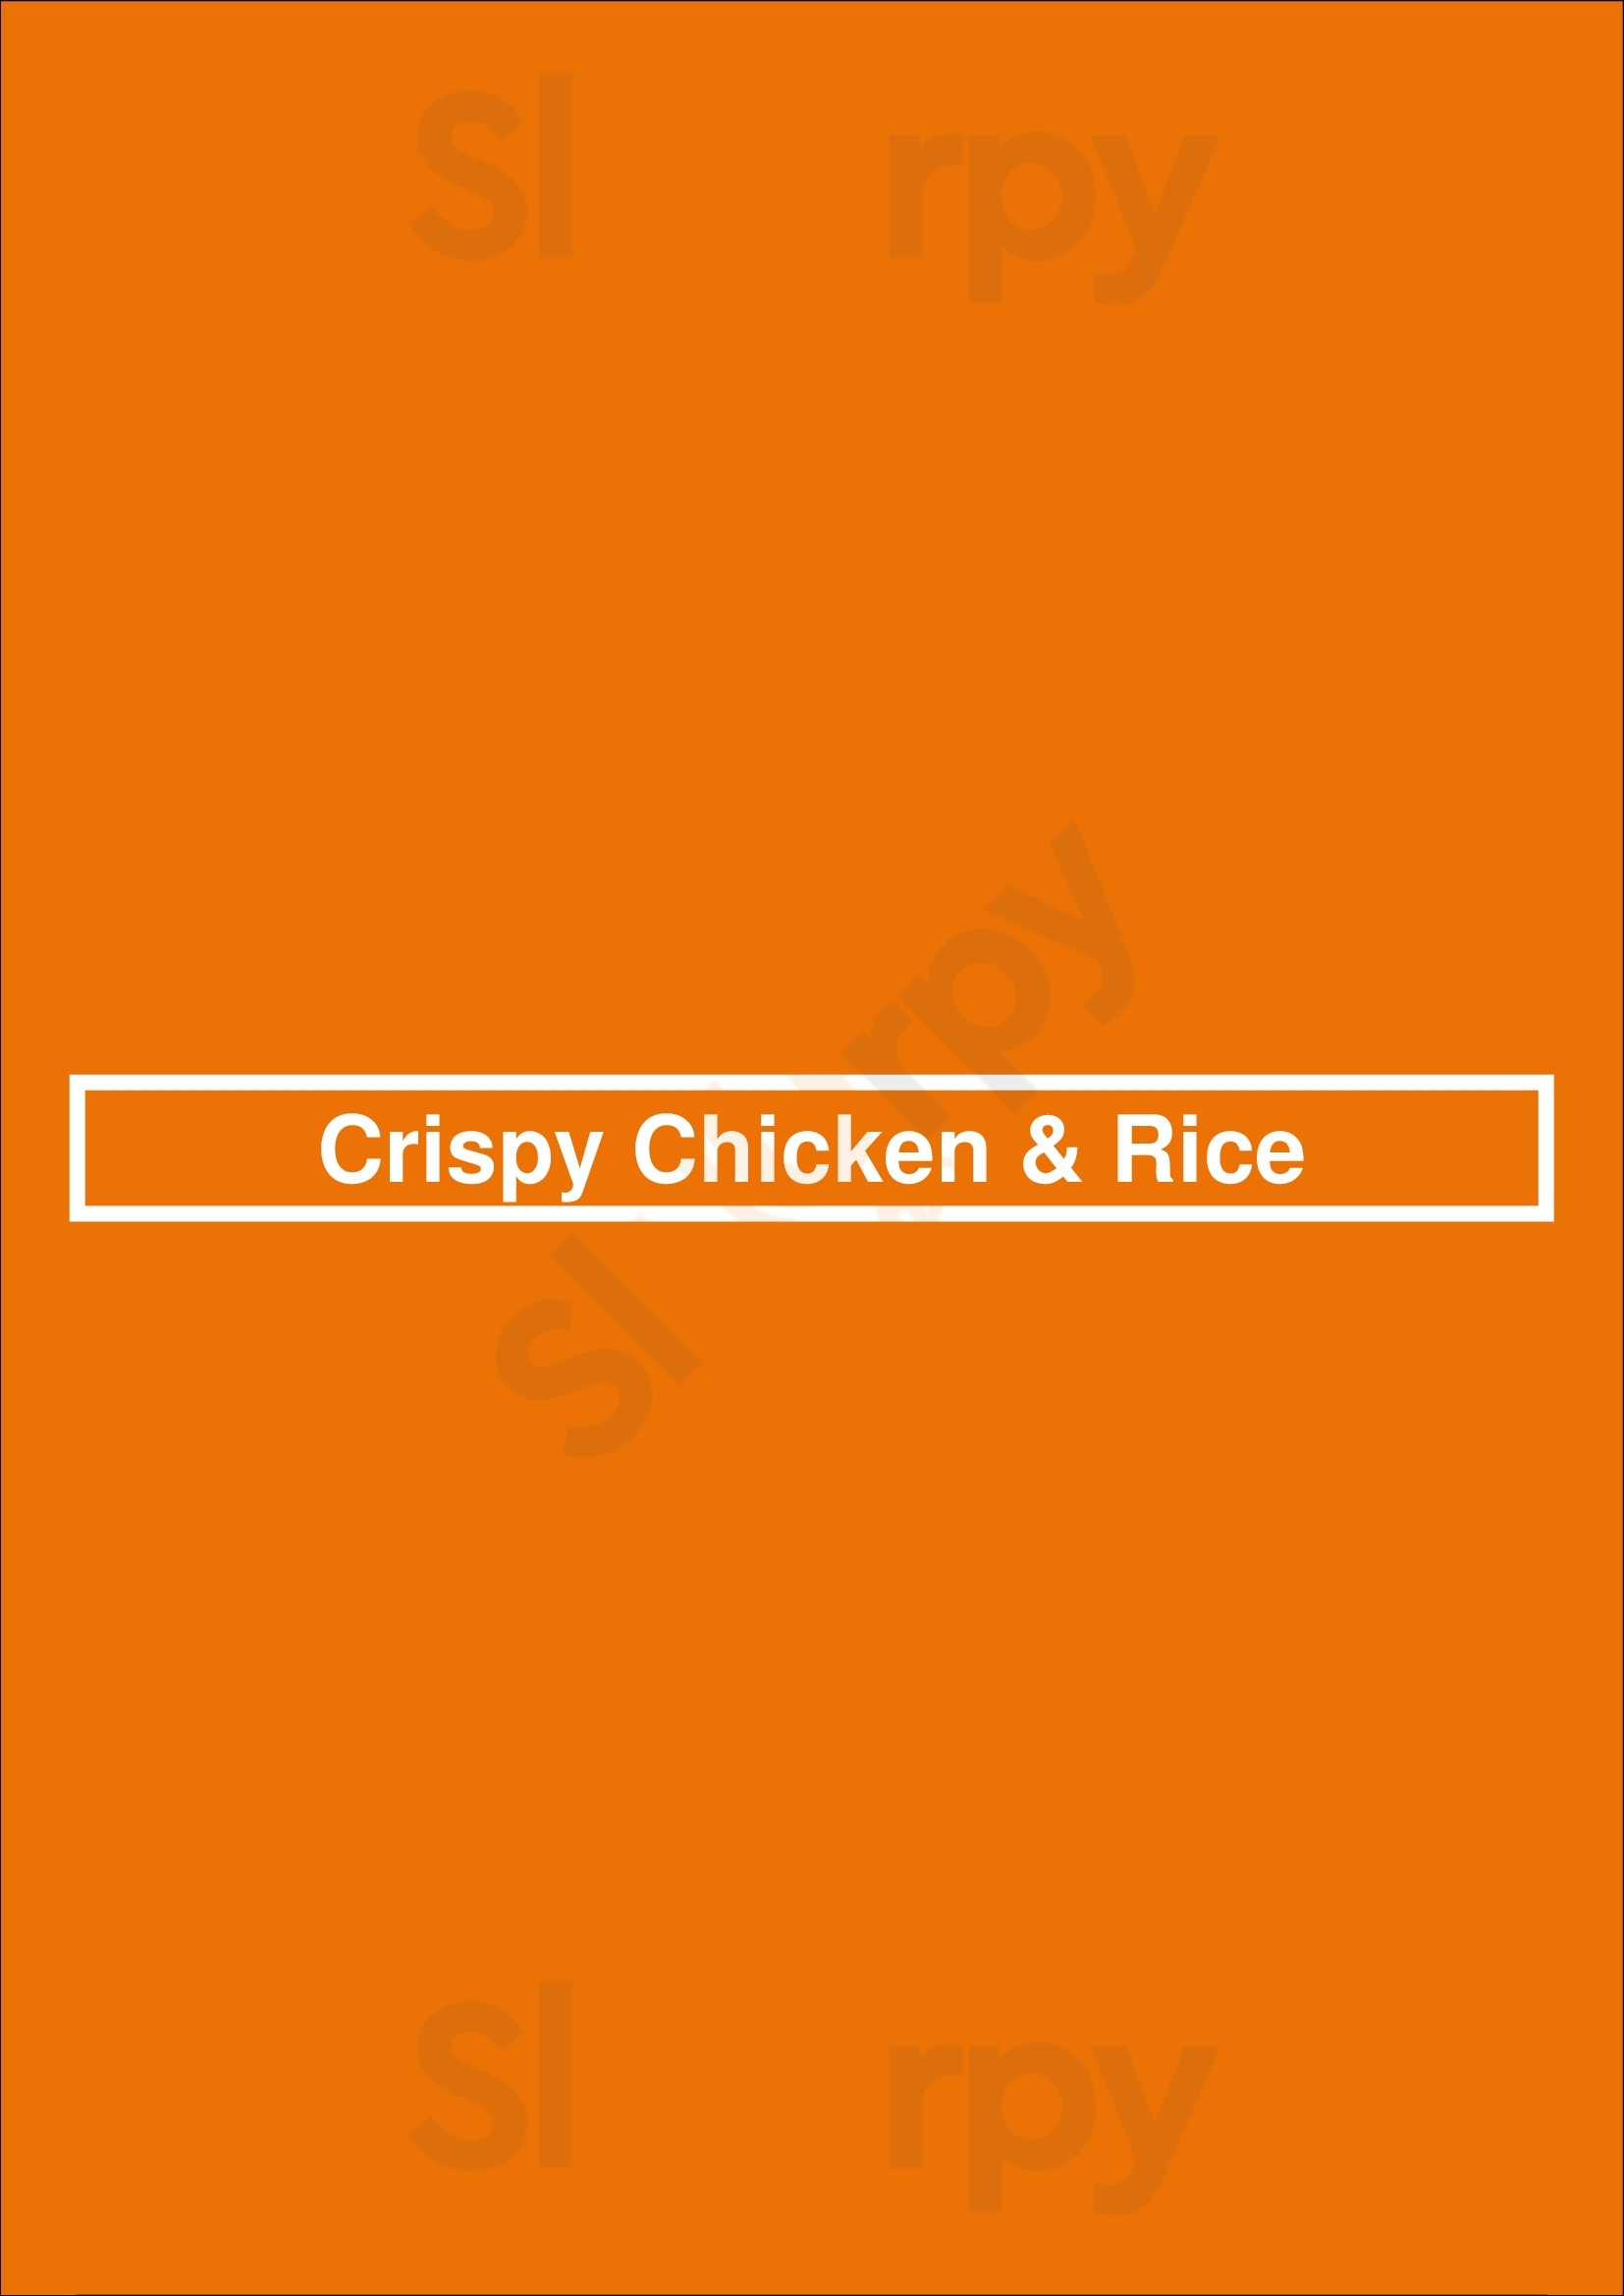 Crispy Chicken & Rice Dallas Menu - 1